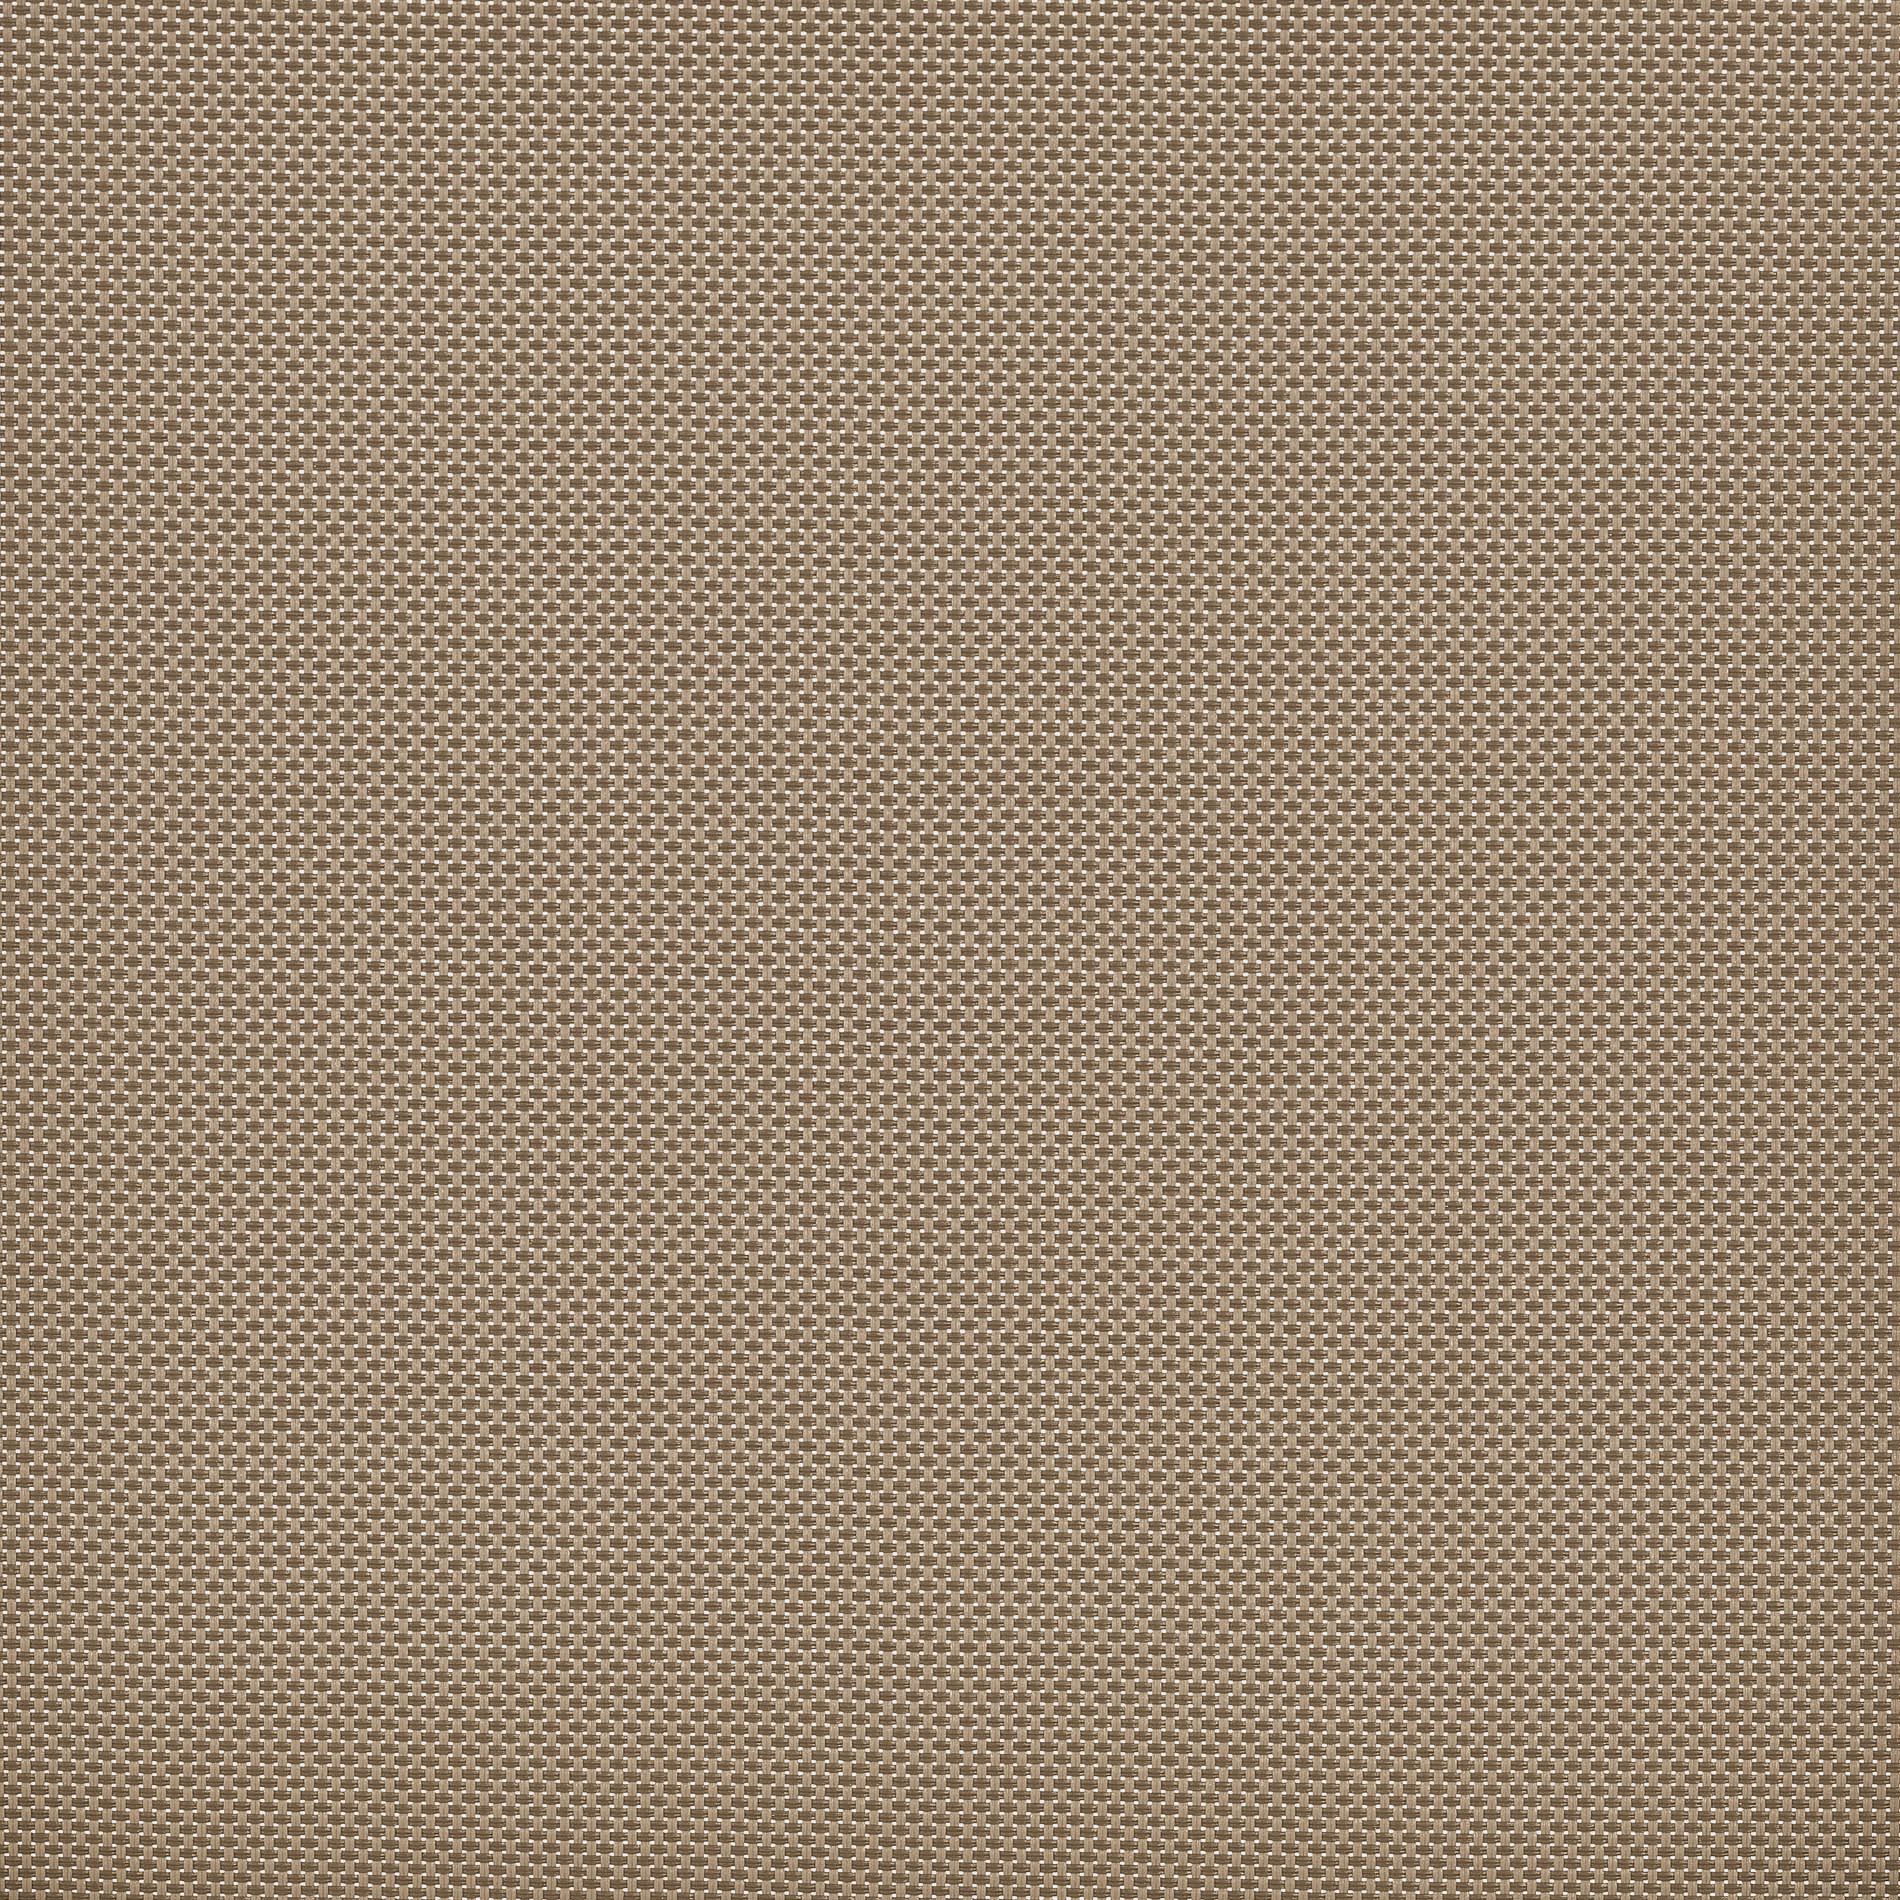 Altex - Fabric - NATTÉ 10% - Sable/Wood - 910988_TEMP_3